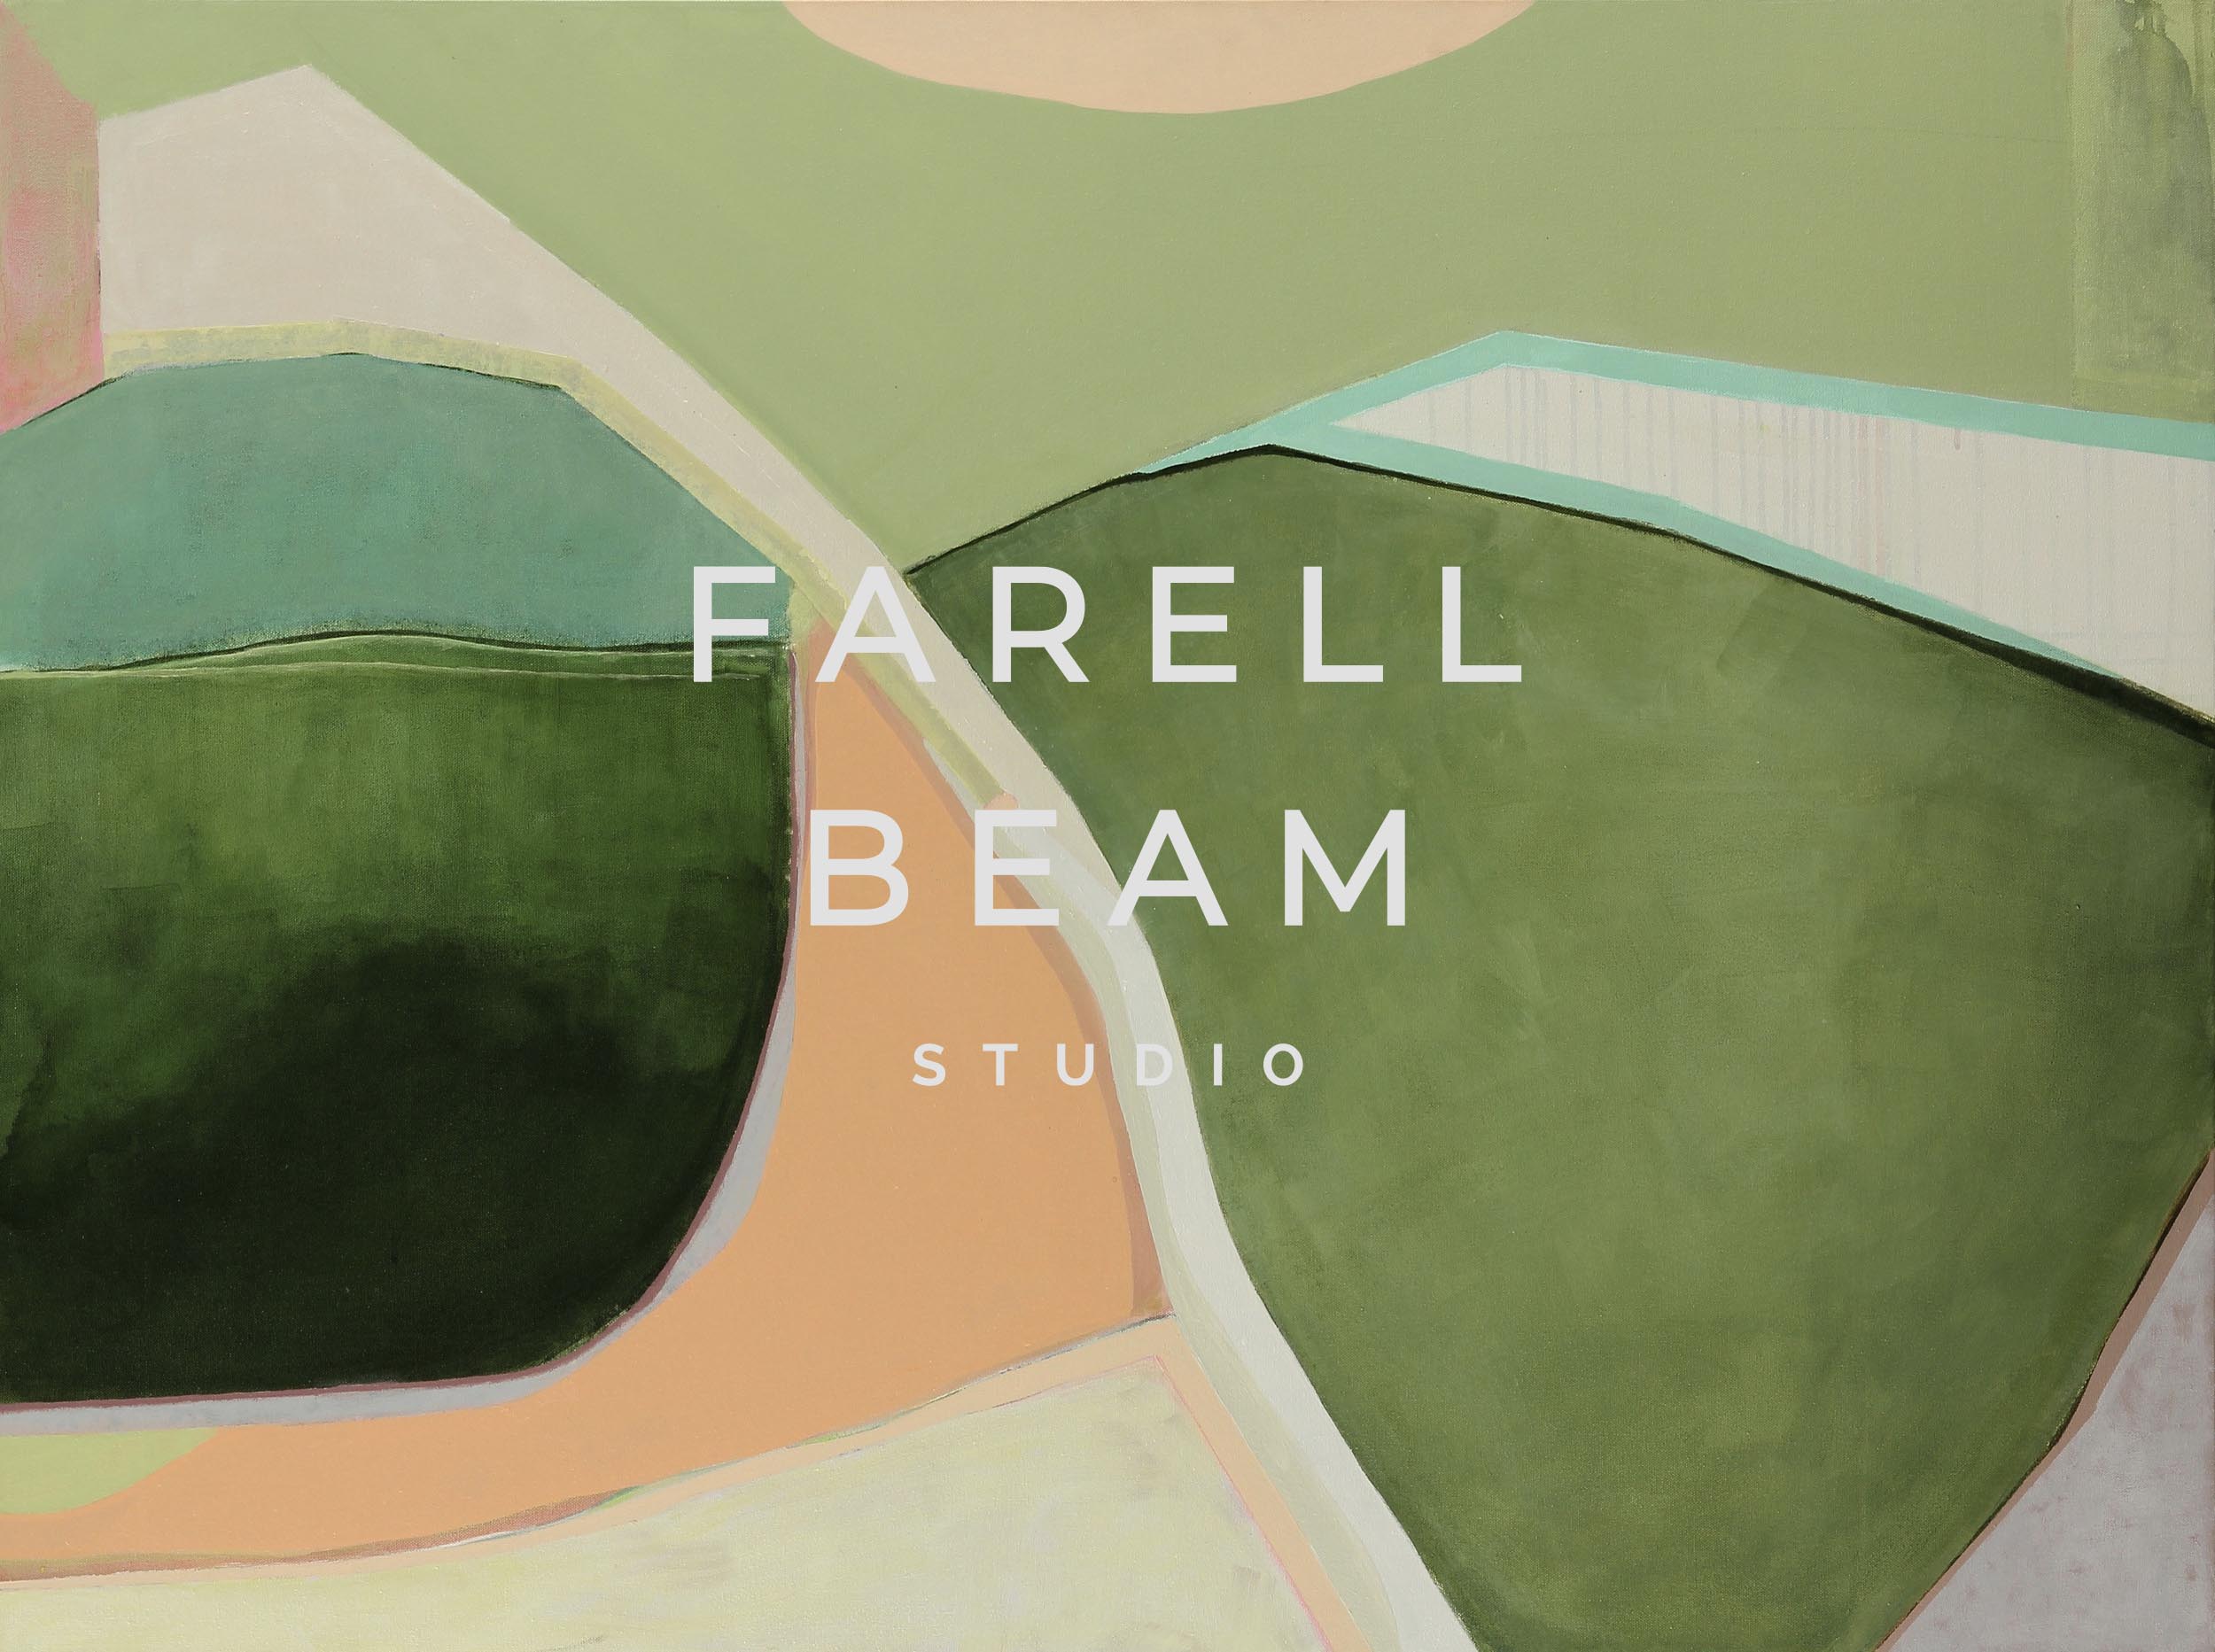 Farell Beam Studio